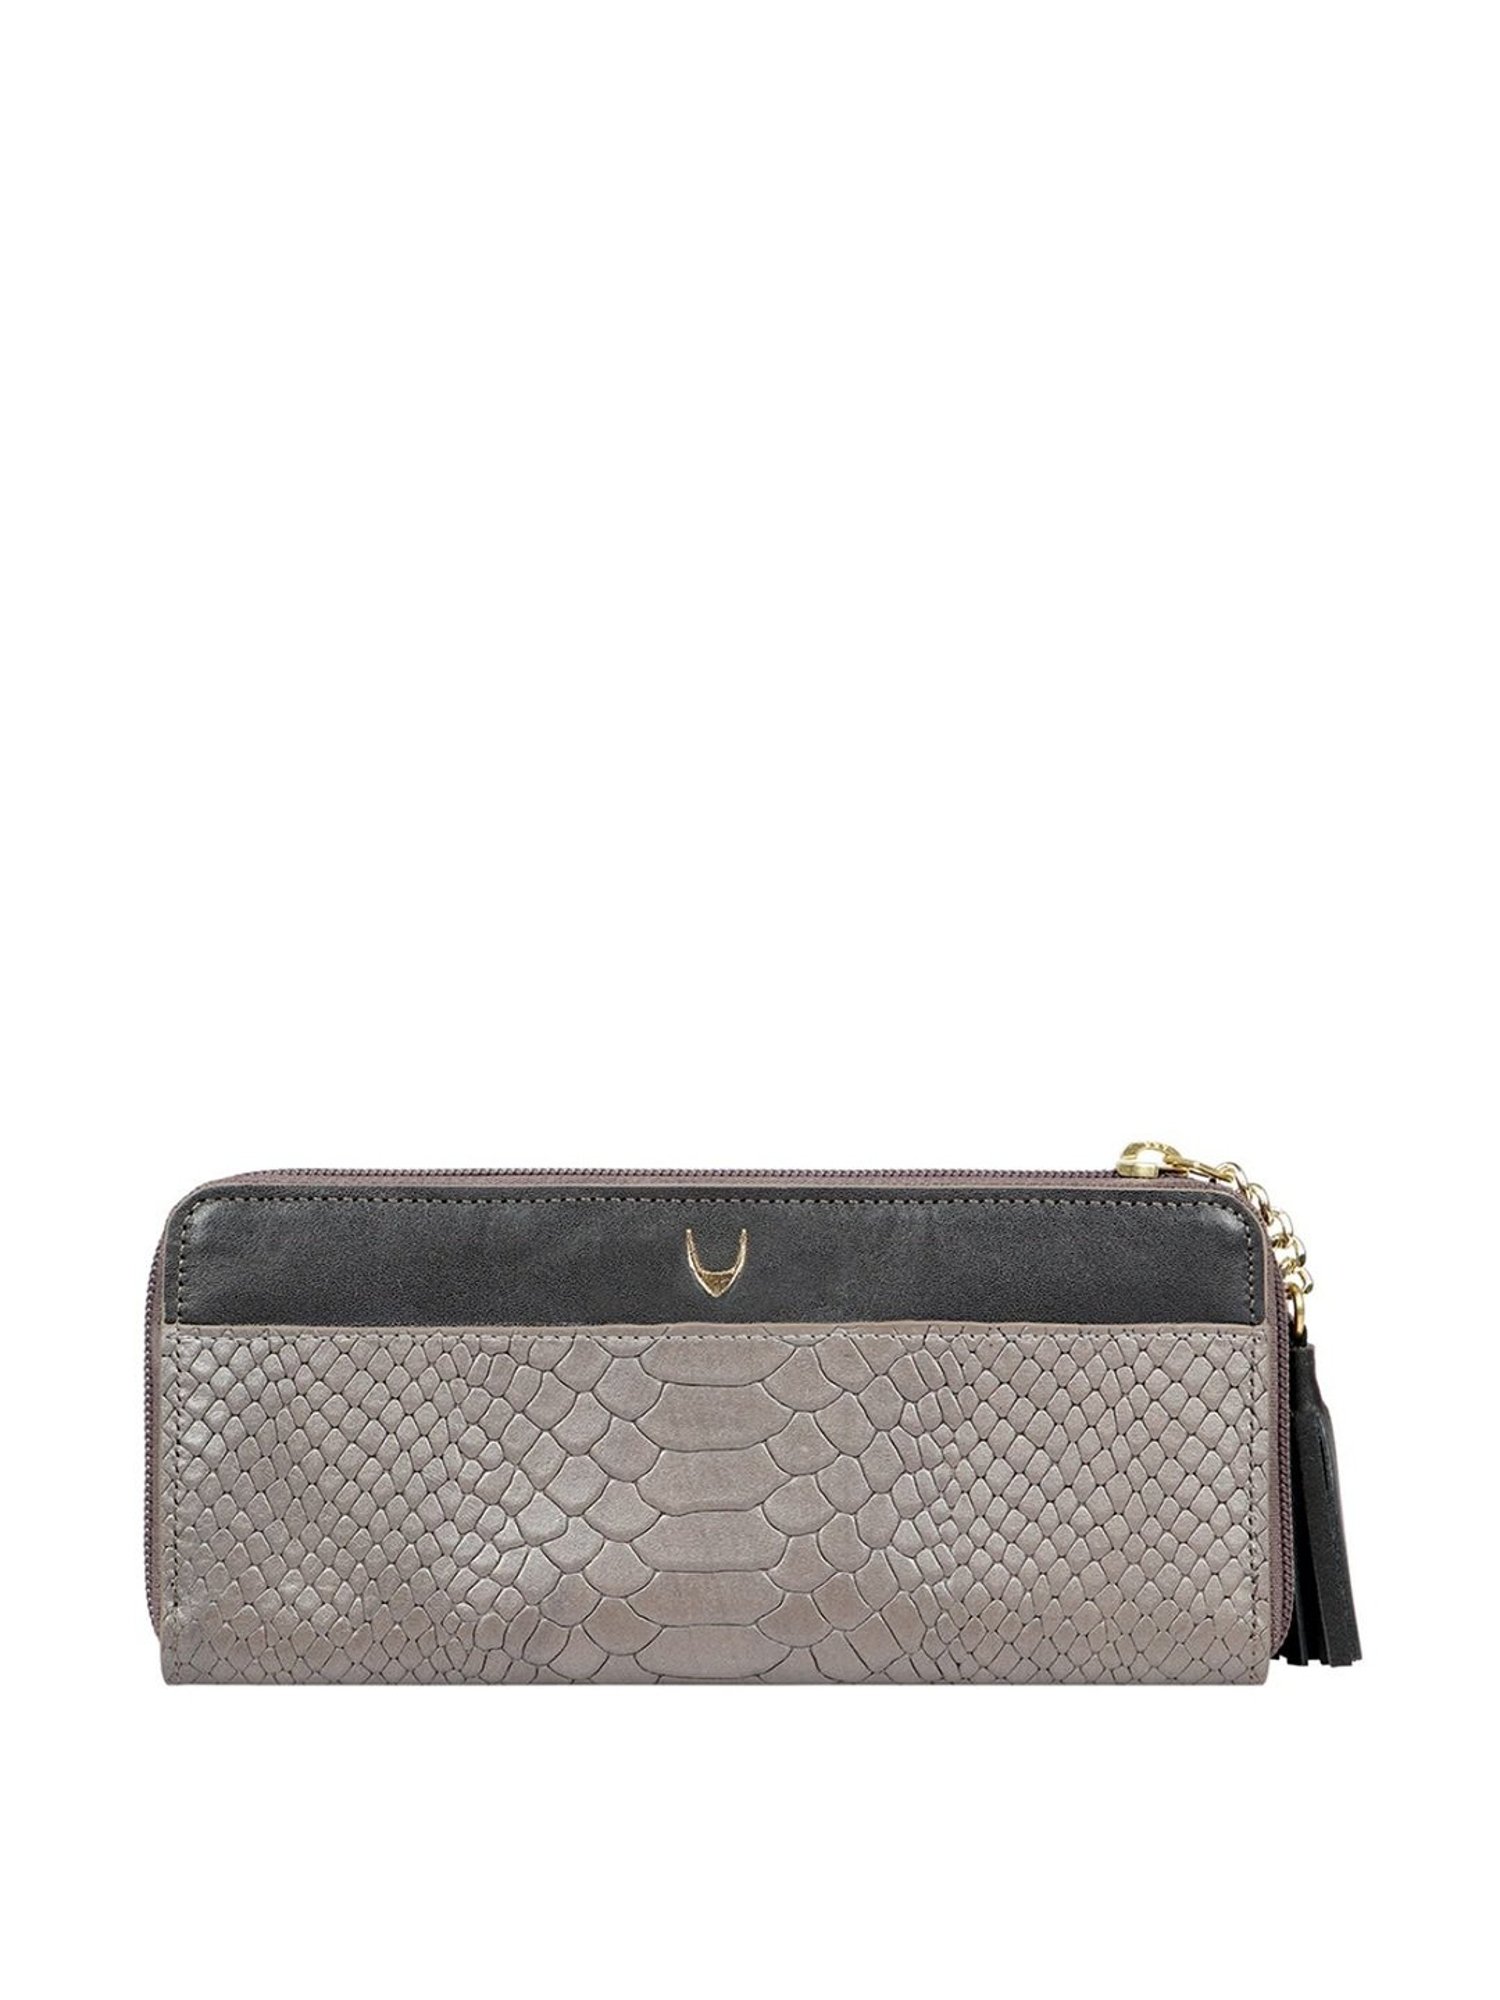 Buy Hidesign Hidesign Malasana Pink Solid Small Sling Handbag at Redfynd